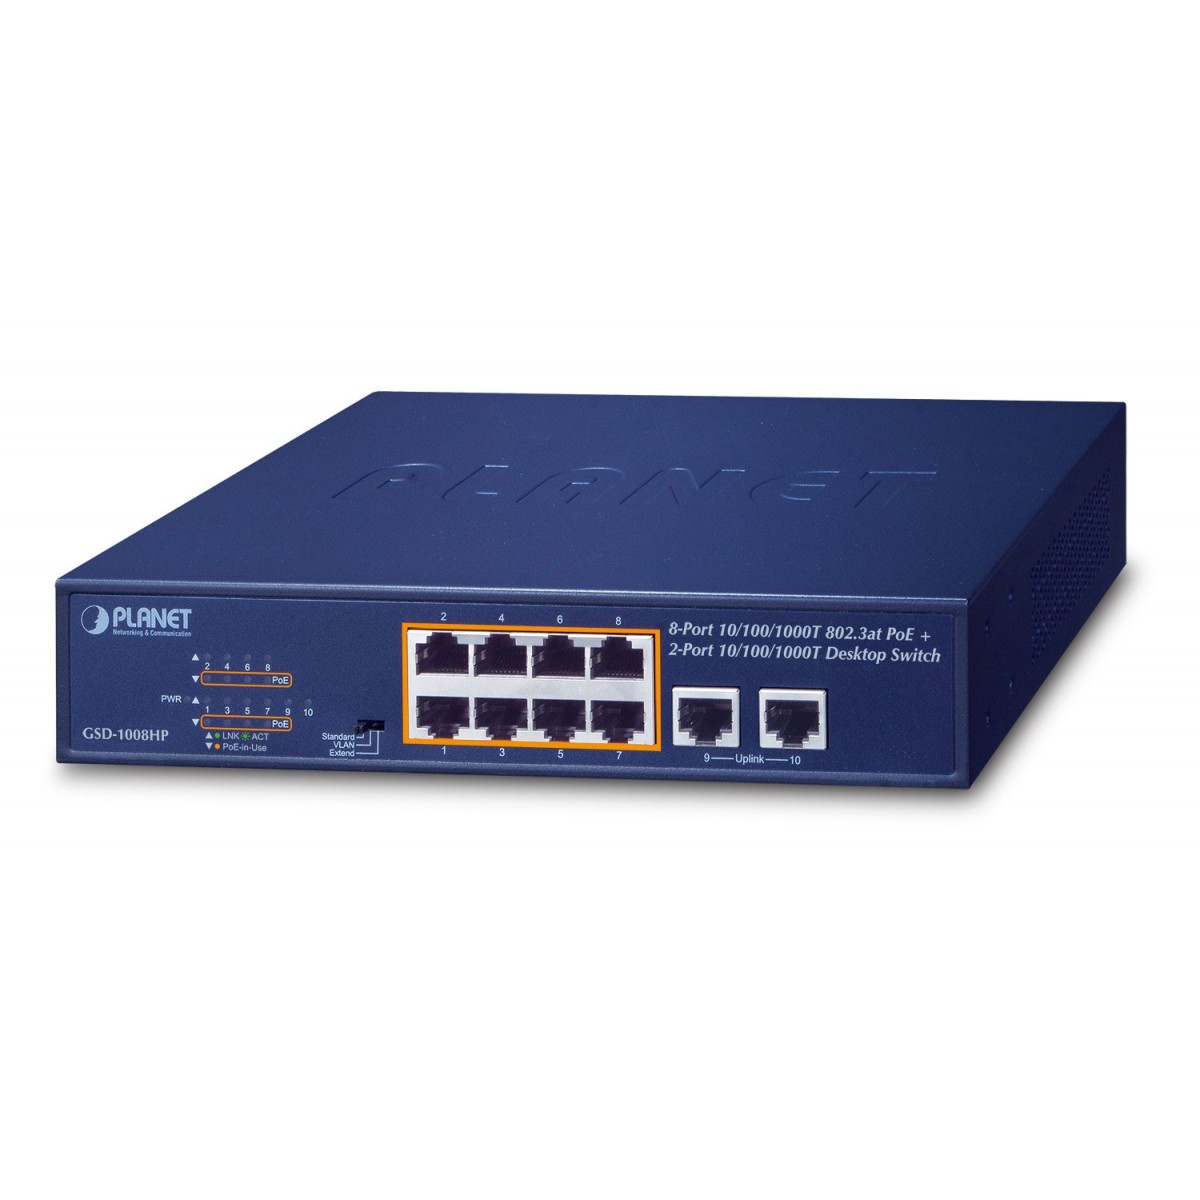 Planet GSD-1008HP - Unmanaged - Gigabit Ethernet (10/100/1000) - Full duplex - Power over Ethernet (PoE) - Rack mounting - 1U